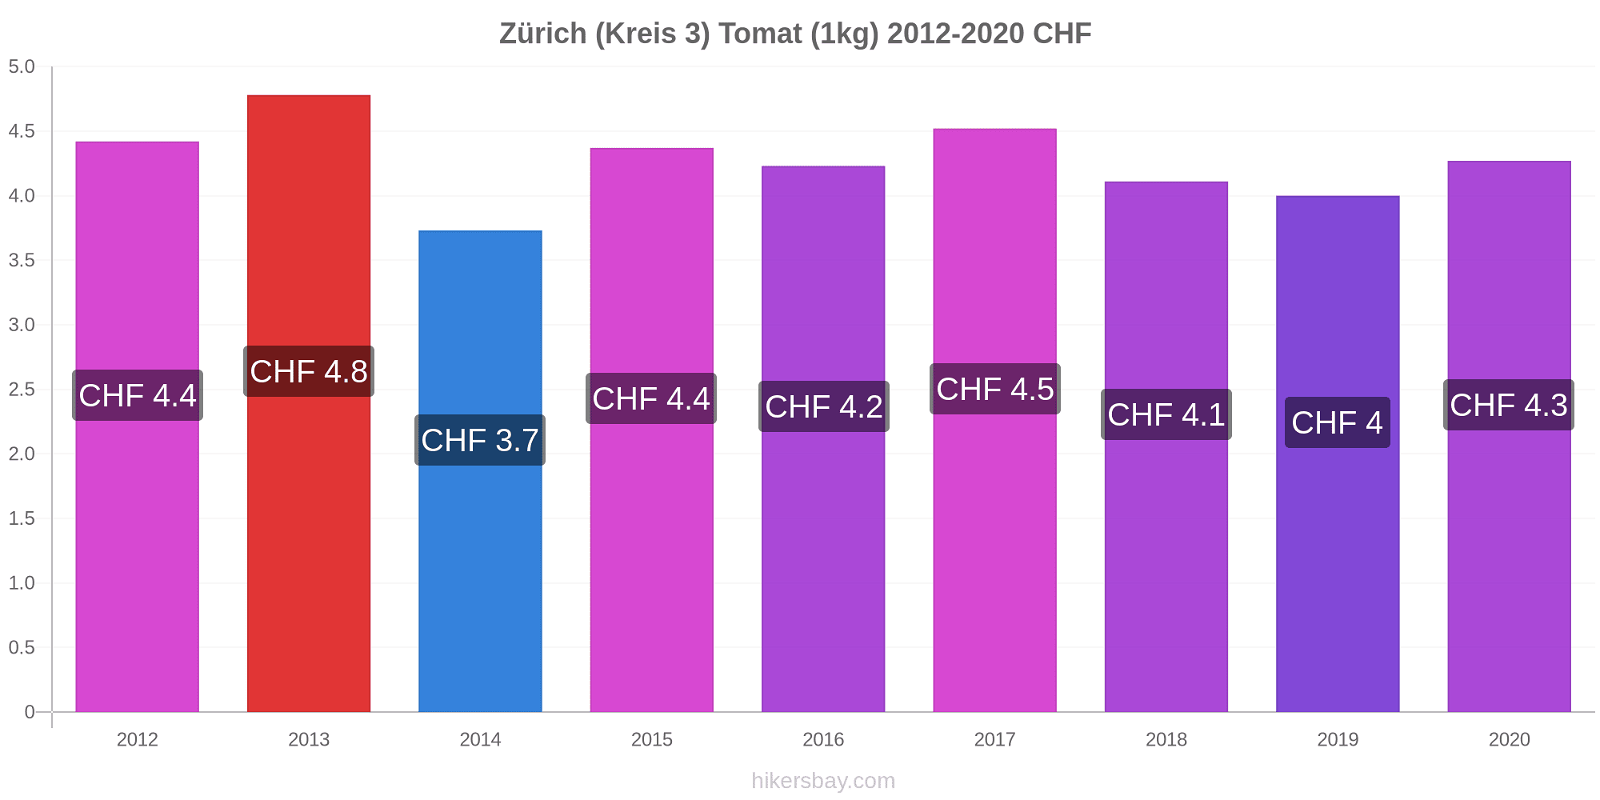 Zürich (Kreis 3) perubahan harga Tomat (1kg) hikersbay.com